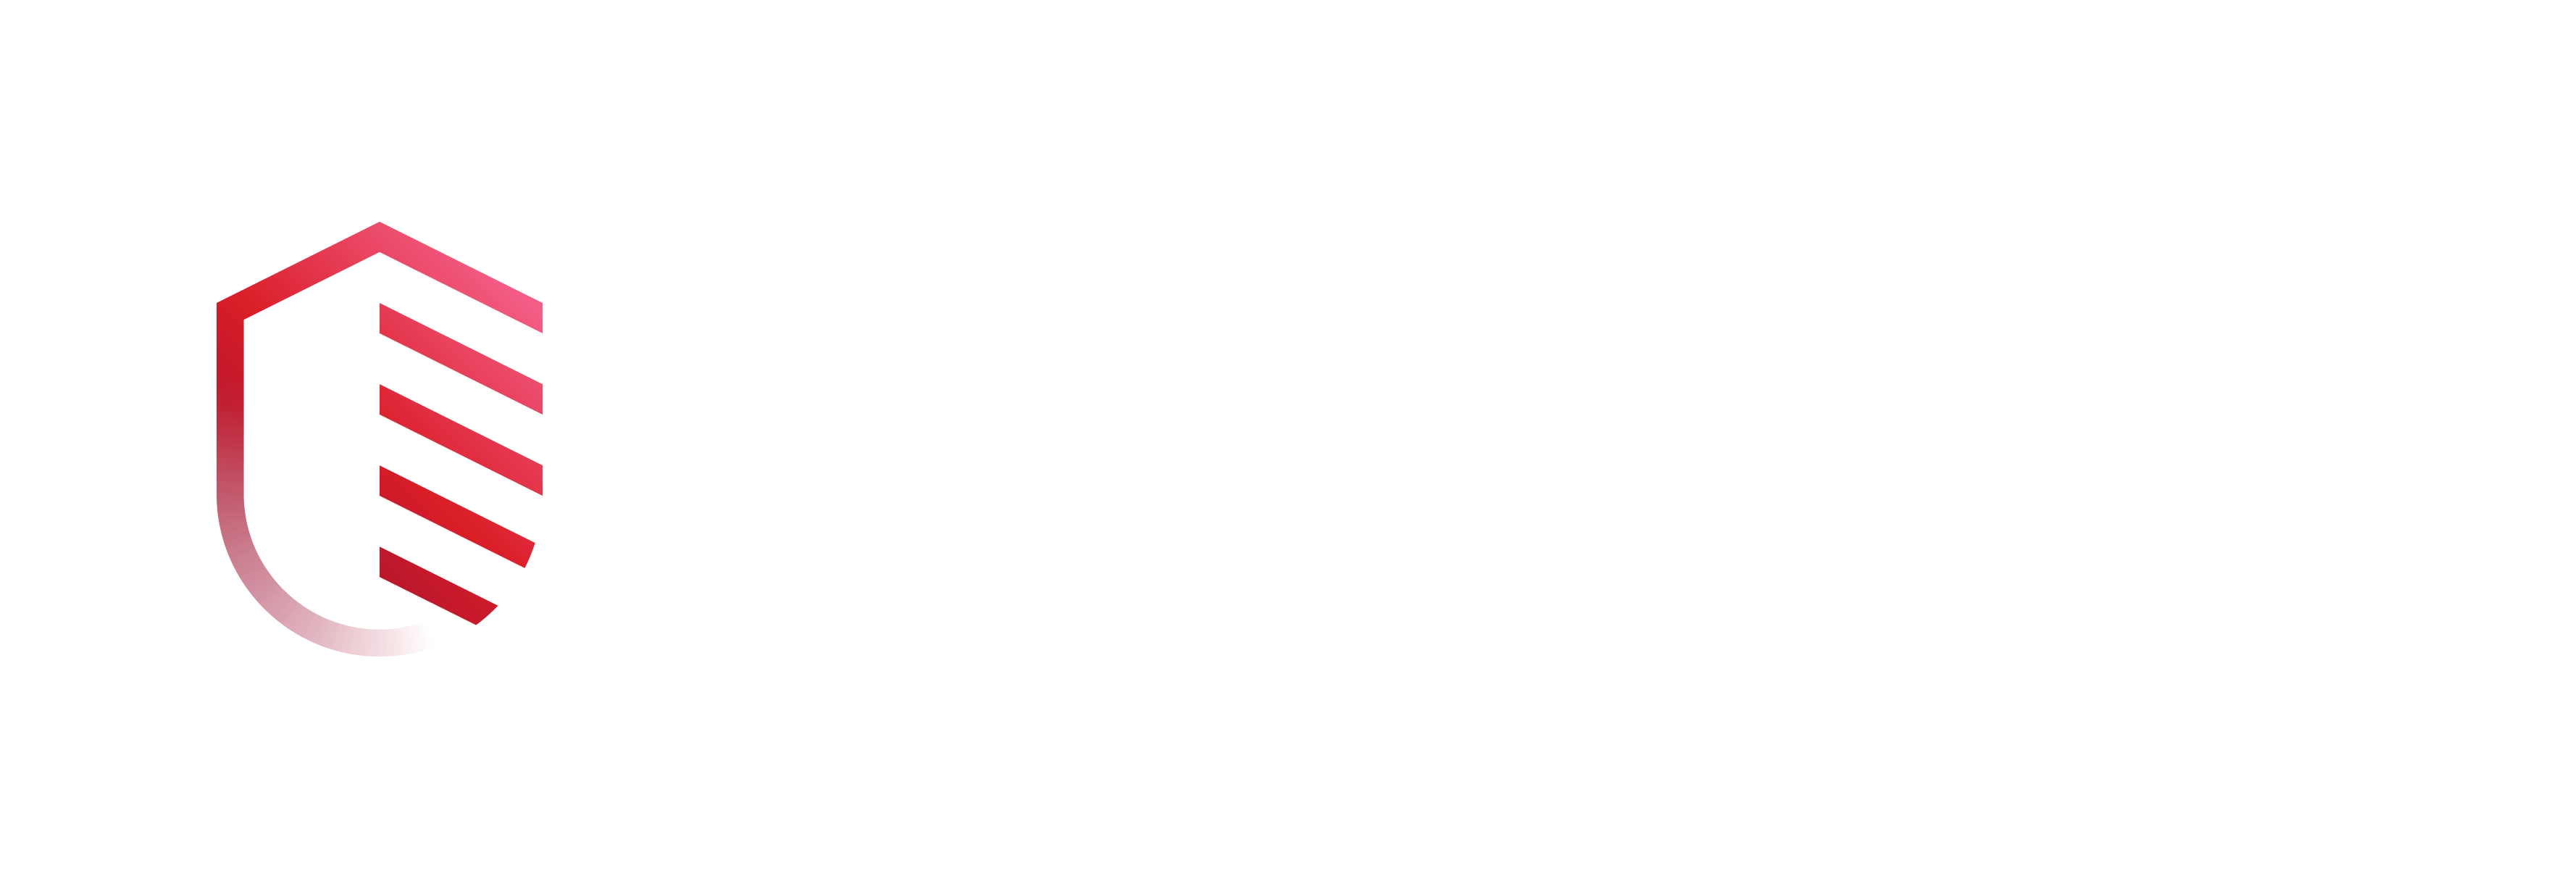 Ibm X Force Red Portal